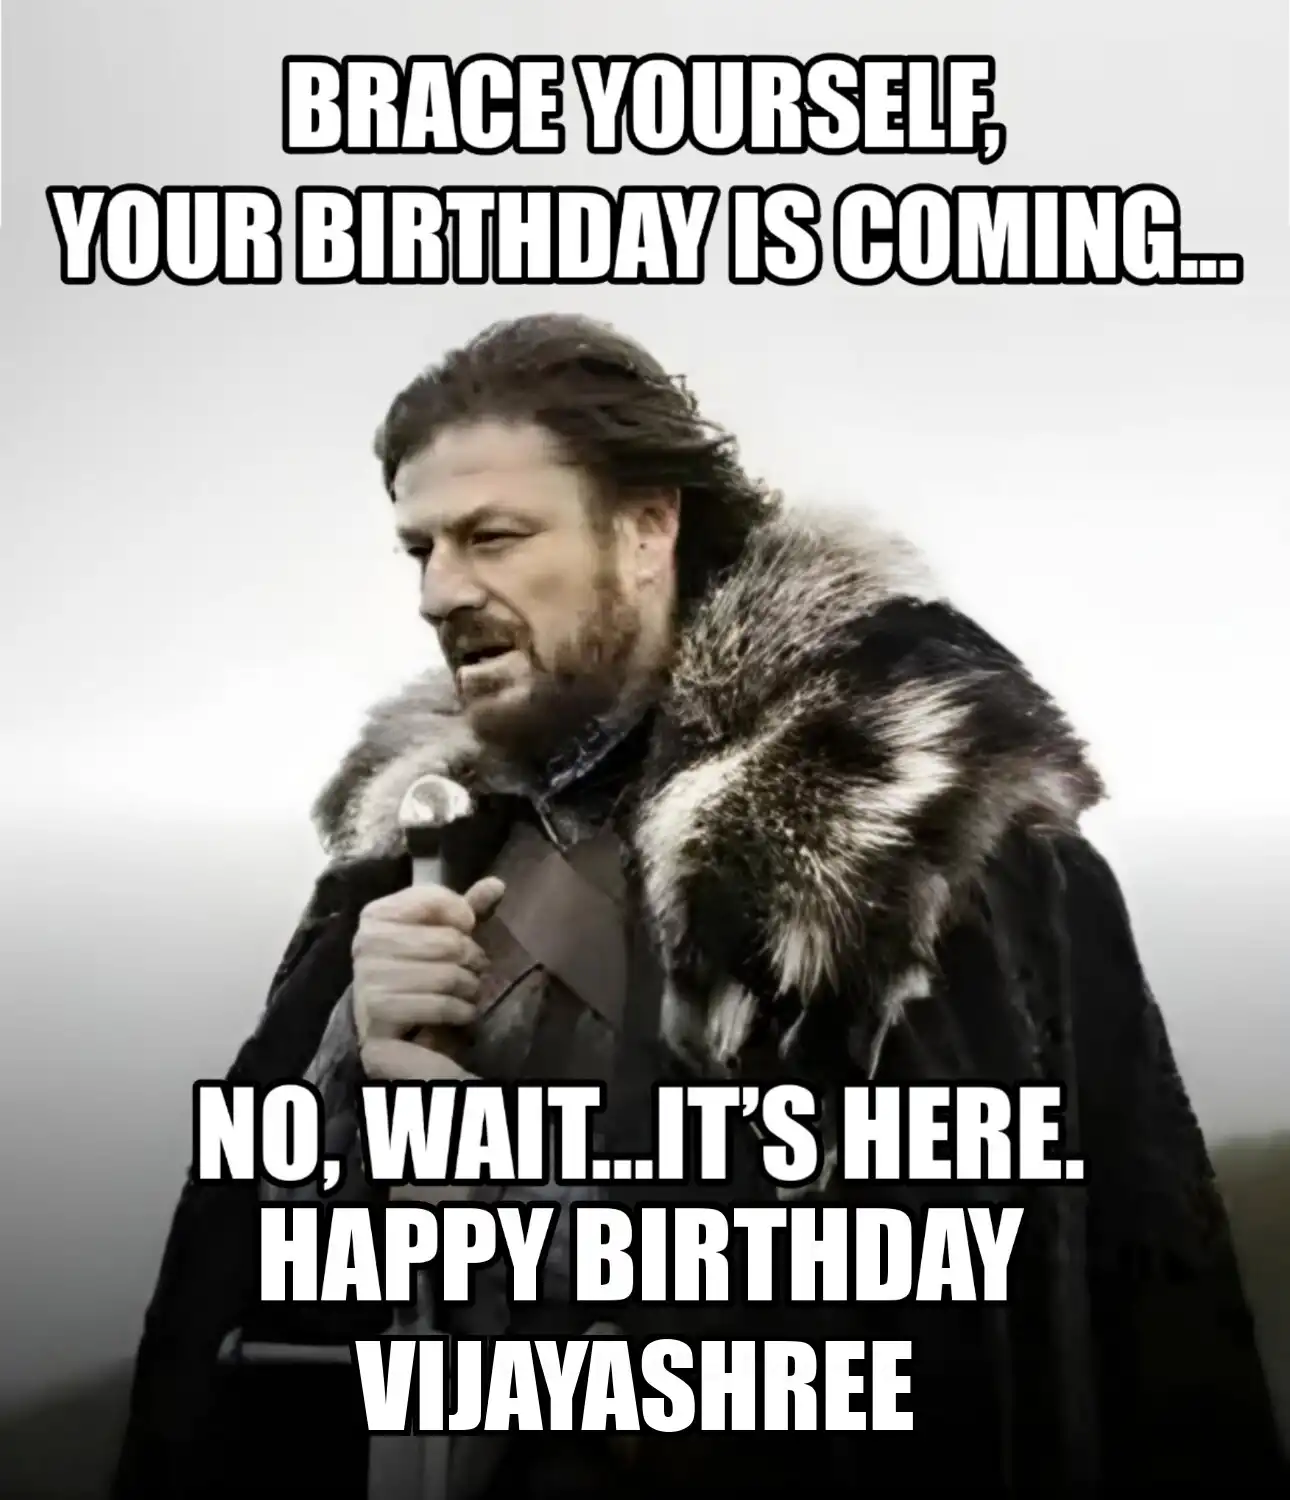 Happy Birthday Vijayashree Brace Yourself Your Birthday Is Coming Meme